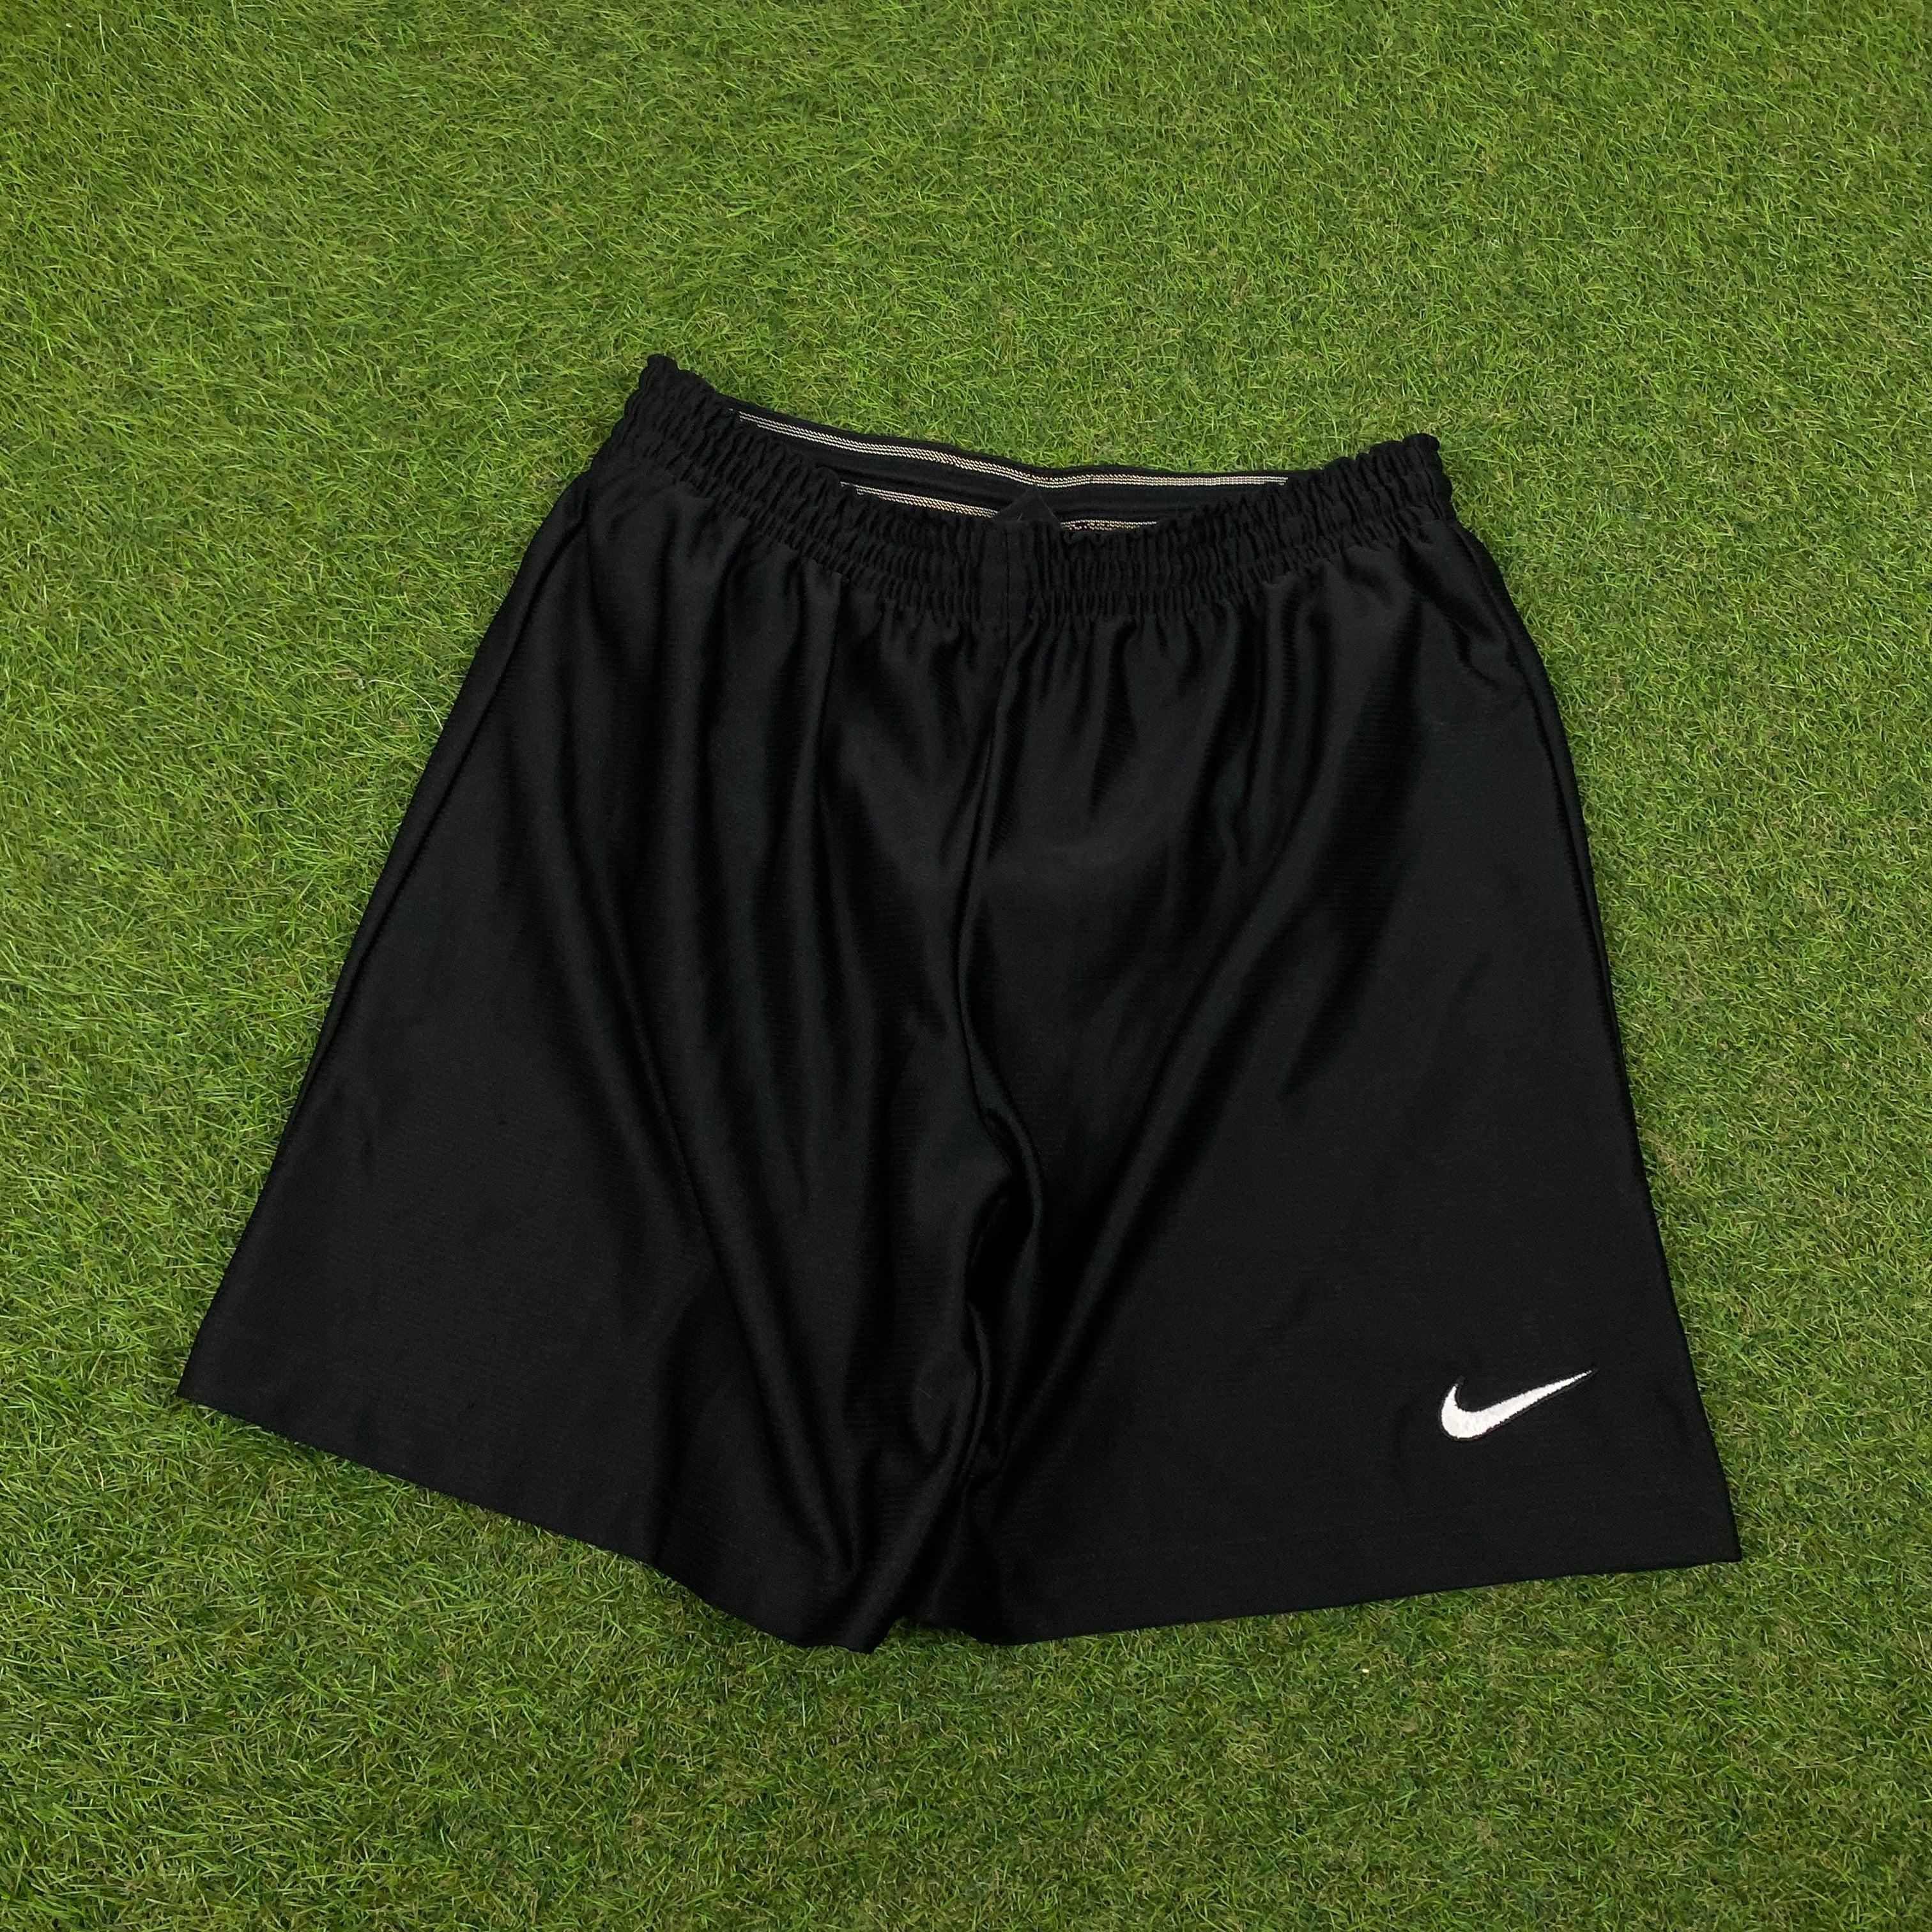 00s Nike Football Shorts Black Small